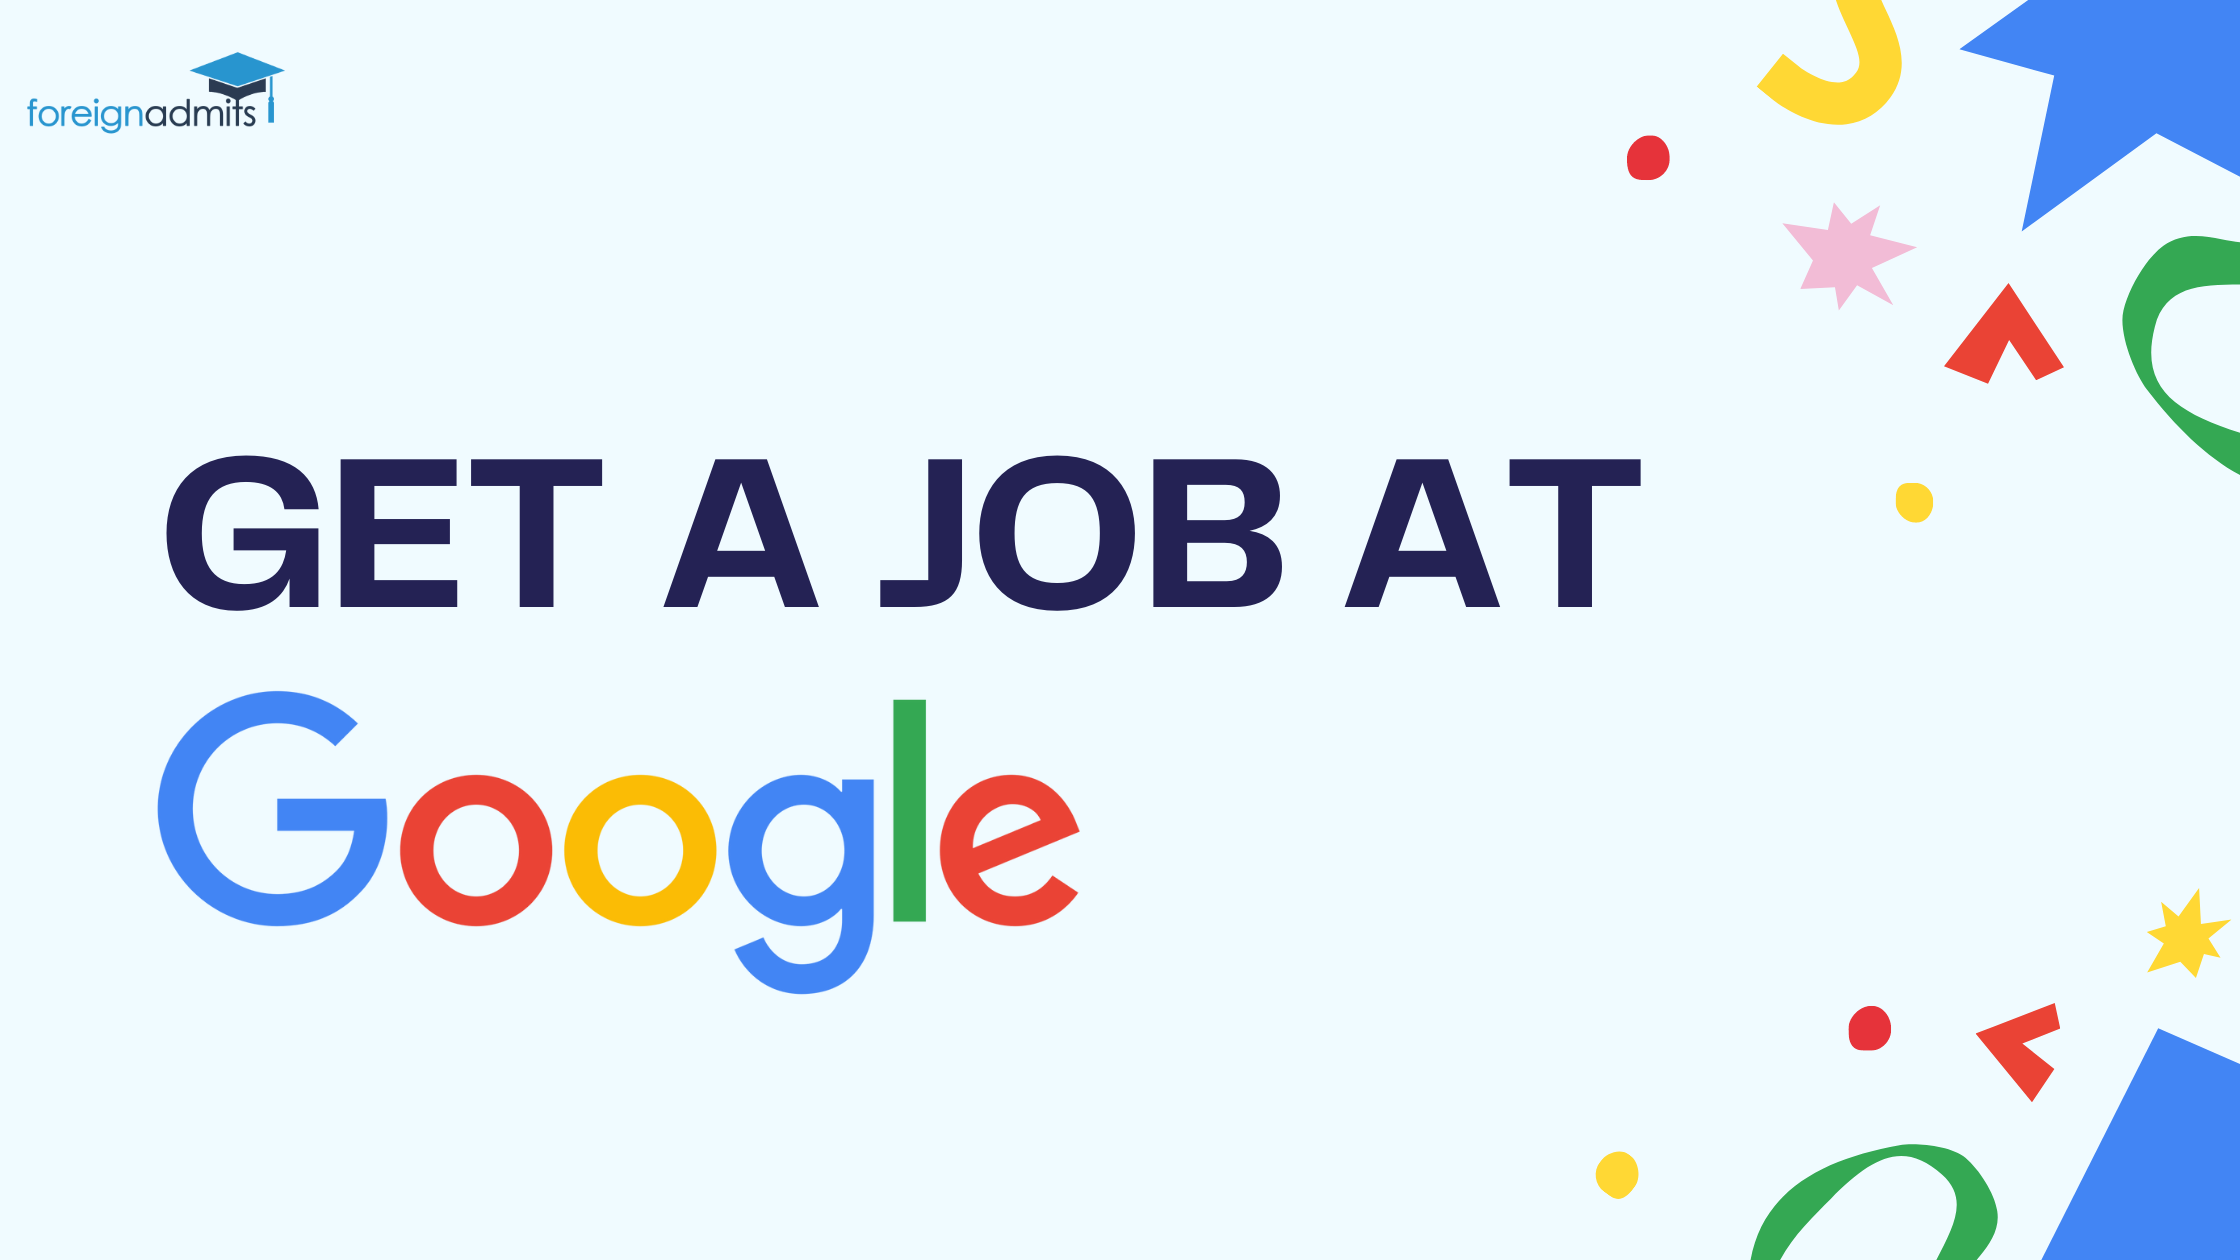 How to get a job at Google?